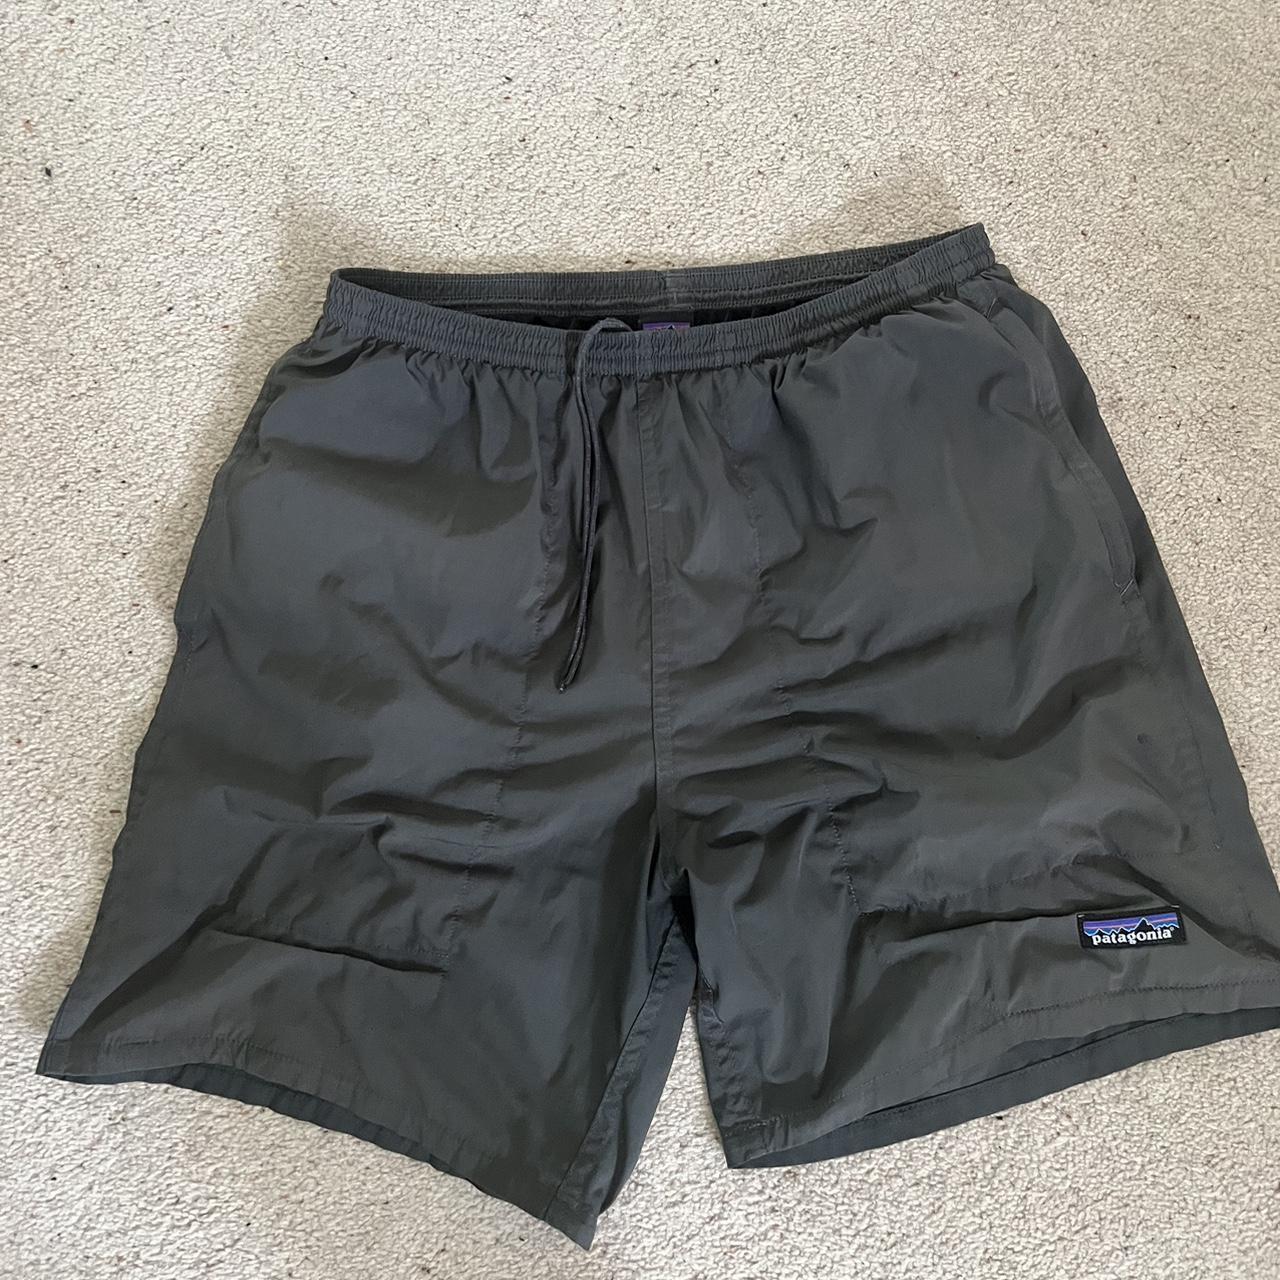 Patagonia baggy shorts Men’s M - Depop